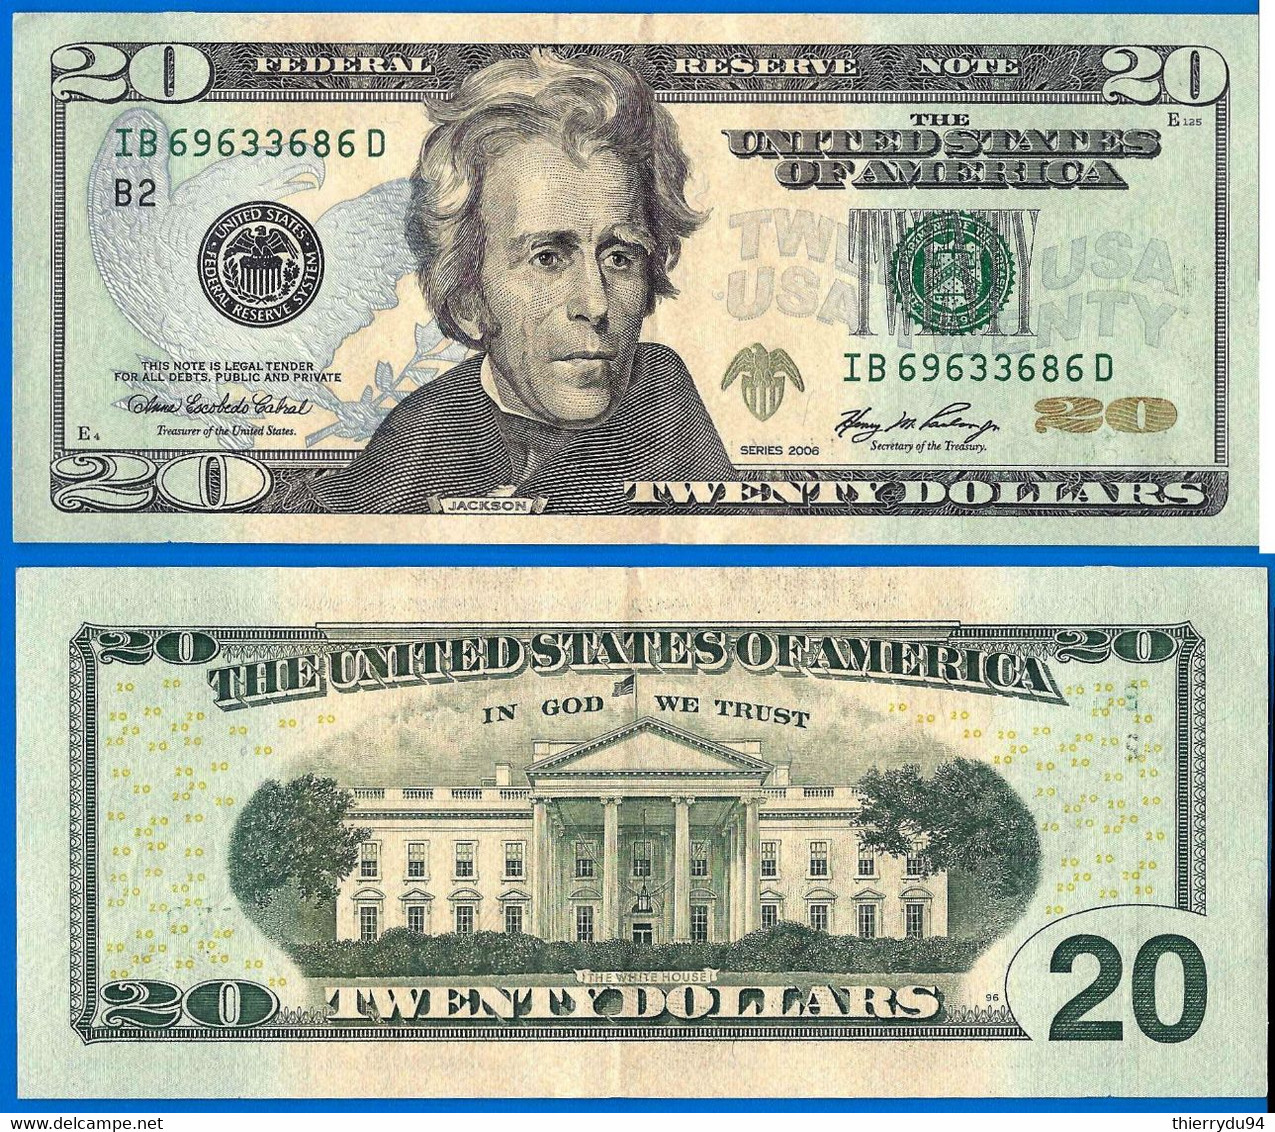 USA 20 Dollars 2006 Mint New York B2 Suffixe D Etats Unis United States Dollars US Paypal Crypto Bitcoin OK - Billets Des États-Unis (1862-1923)